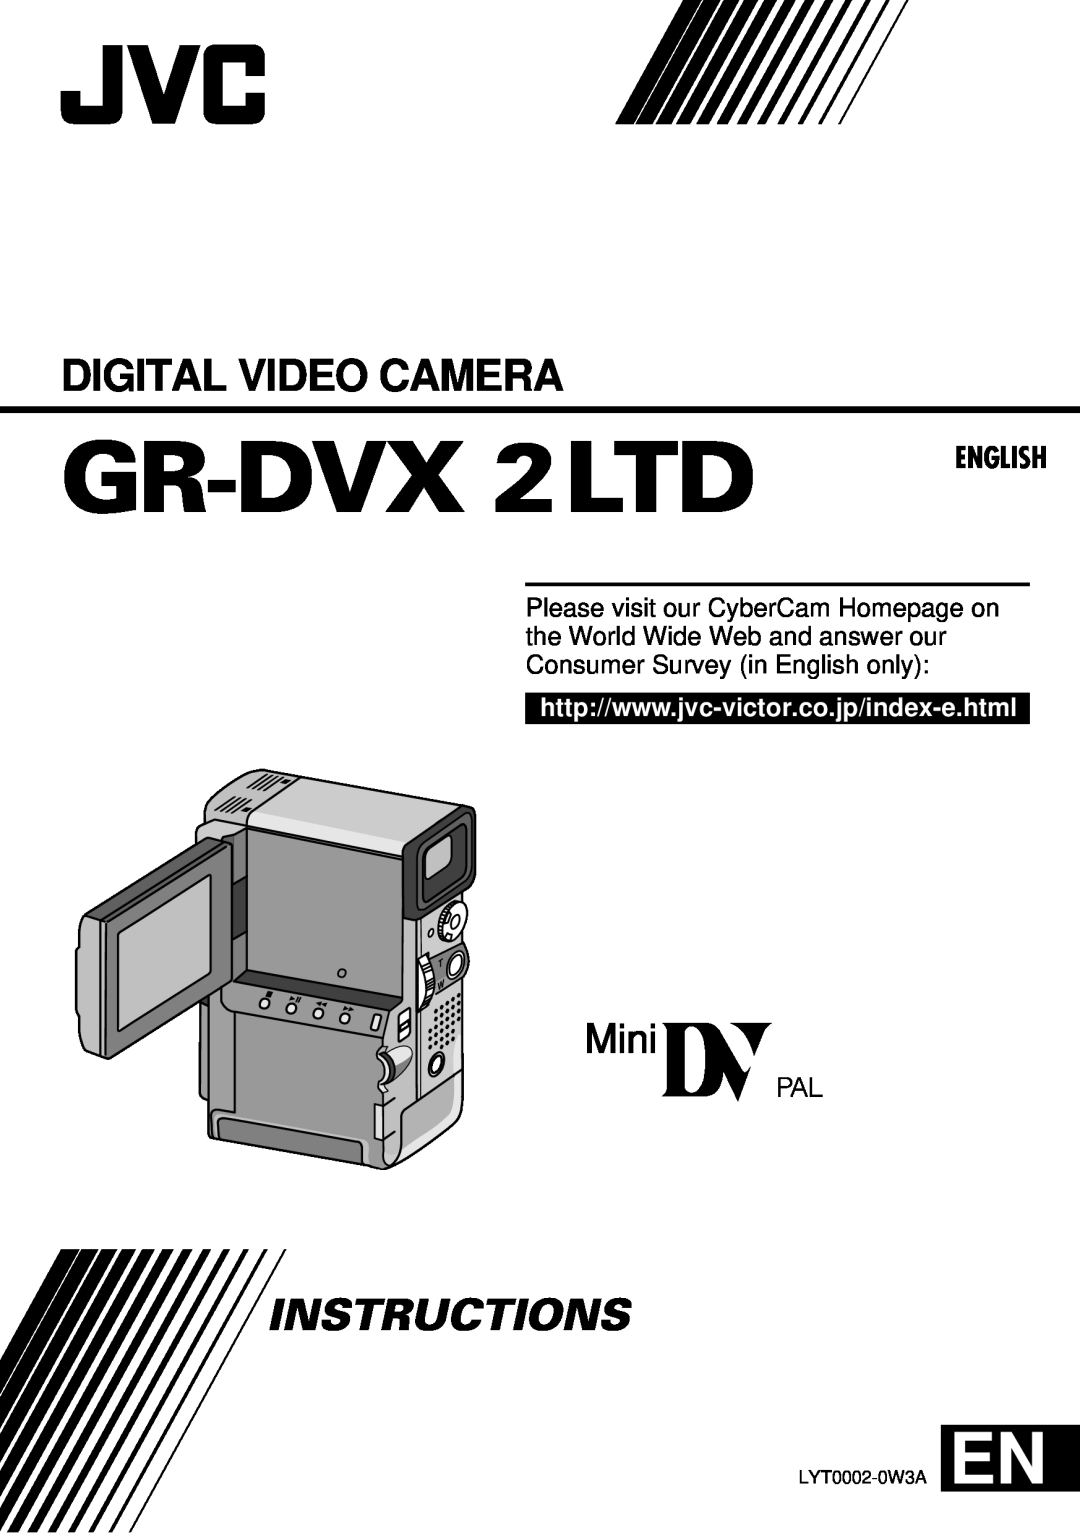 JVC GR-DVX 2LTD manual Digital Video Camera, Instructions, English, LYT0002-0W3A EN 